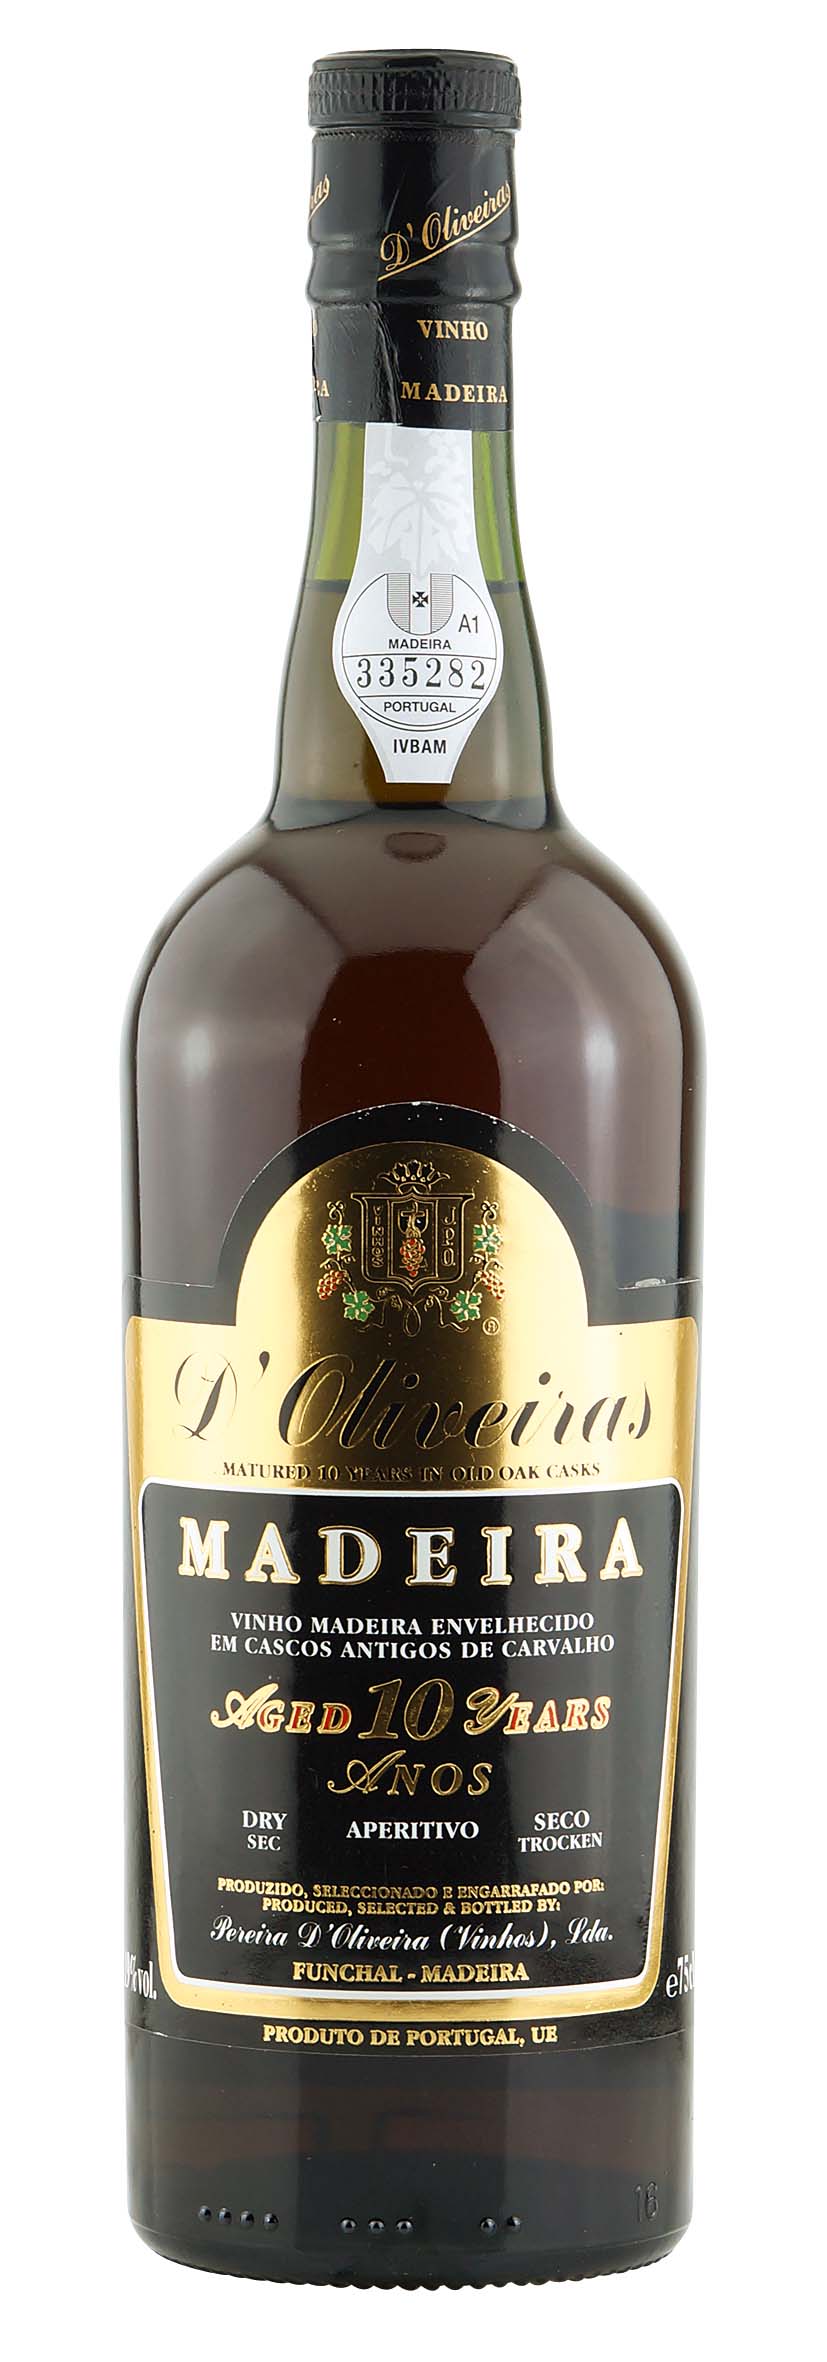 Madeira Aged 10 Years Aperitivo Dry 0